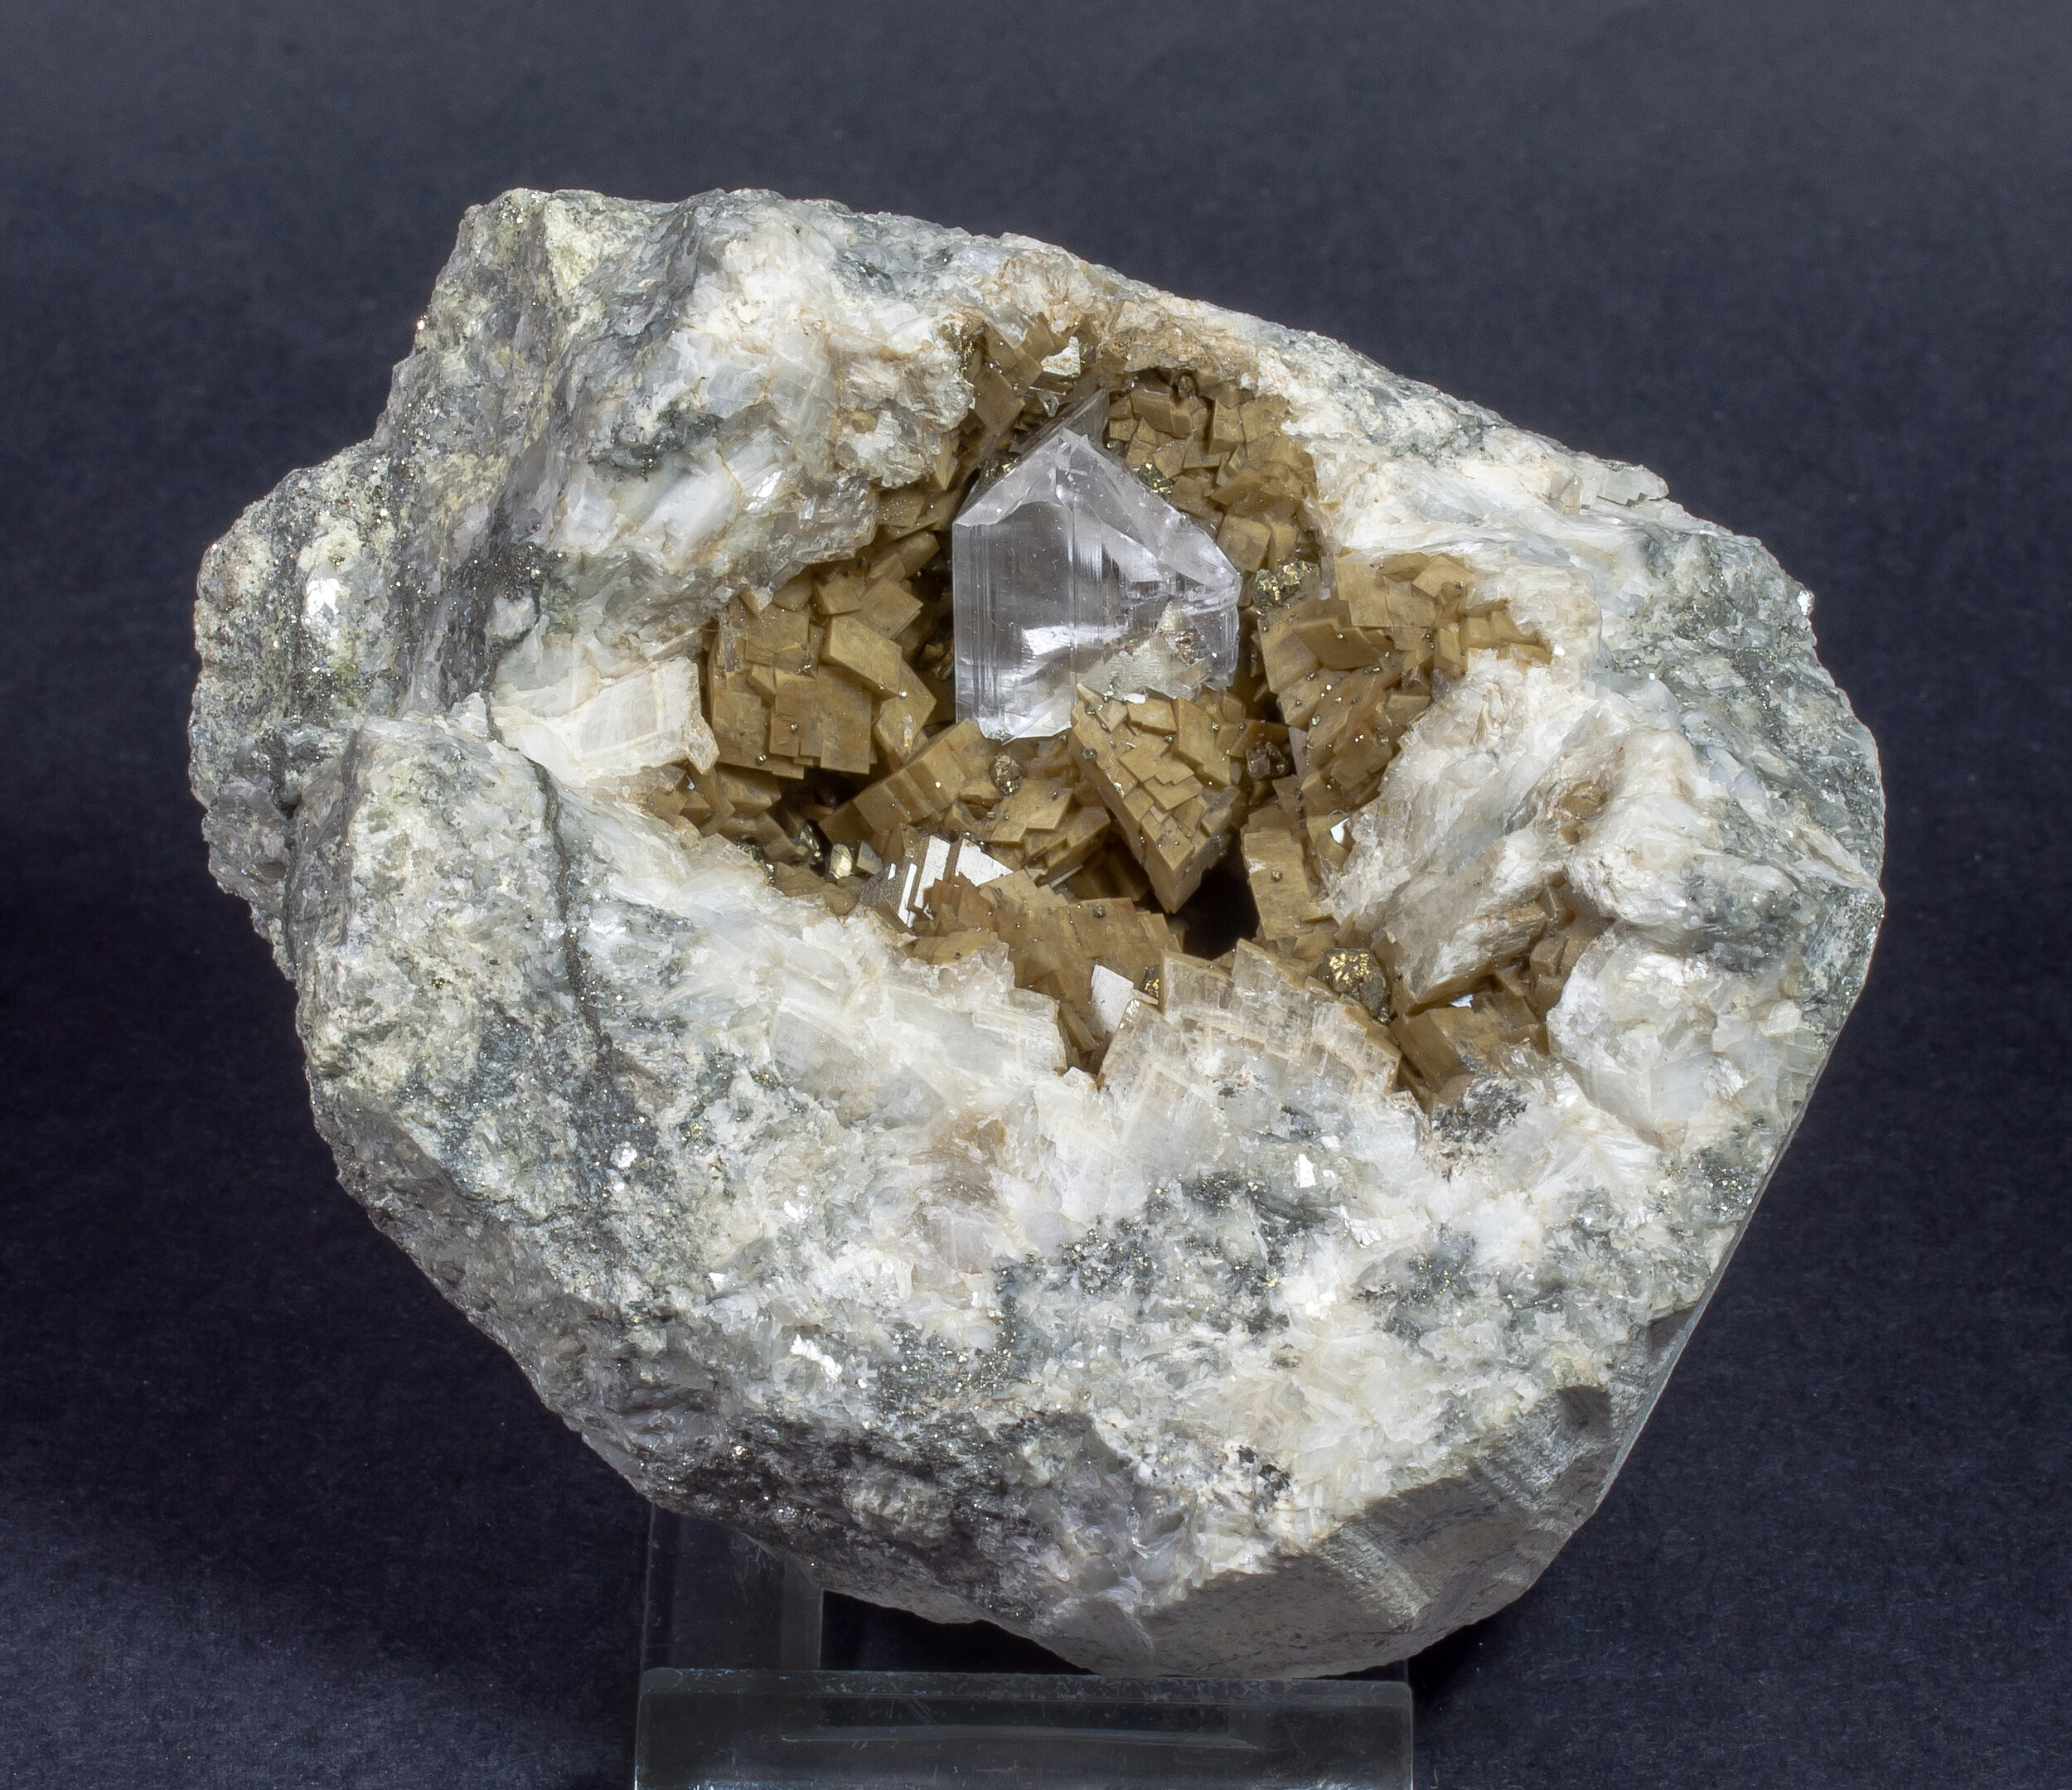 specimens/s_imagesAM7/Chalcopyrite-NA14AM7f.jpg